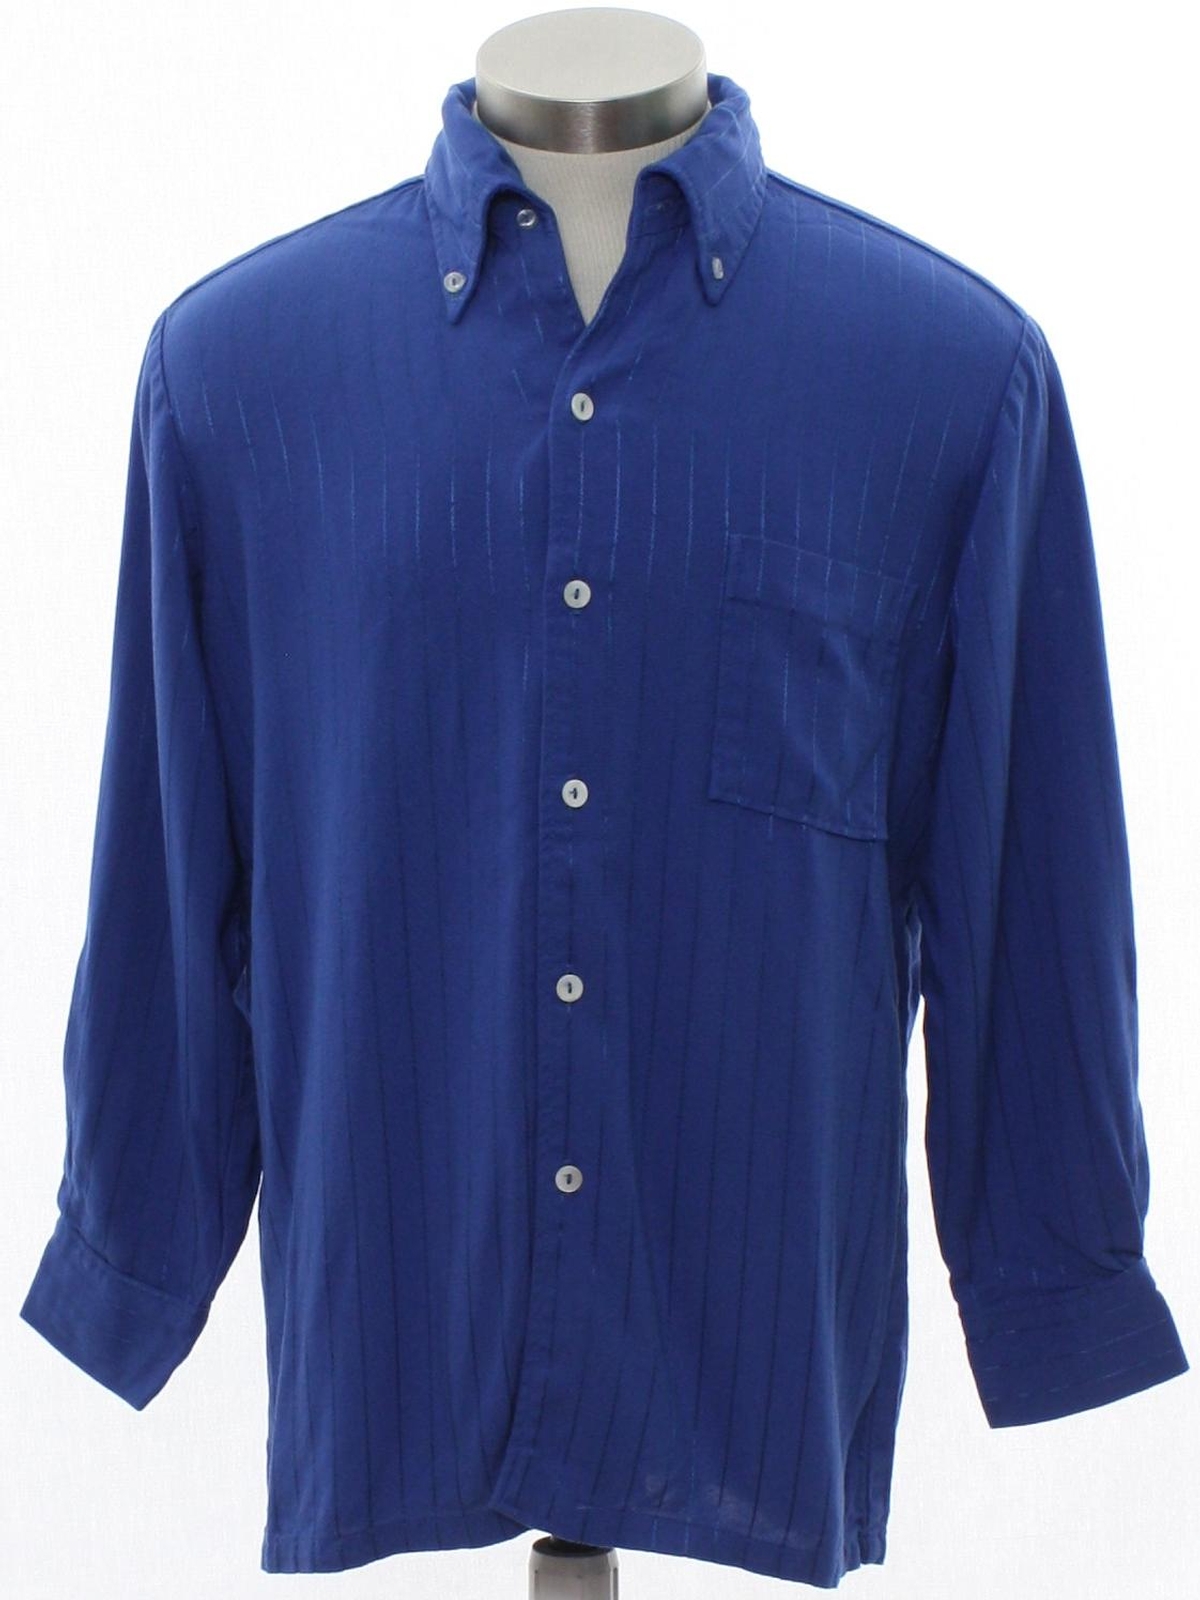 Retro Sixties Shirt: Late 60s or early 70s -Capri- Unisex Ladies or ...